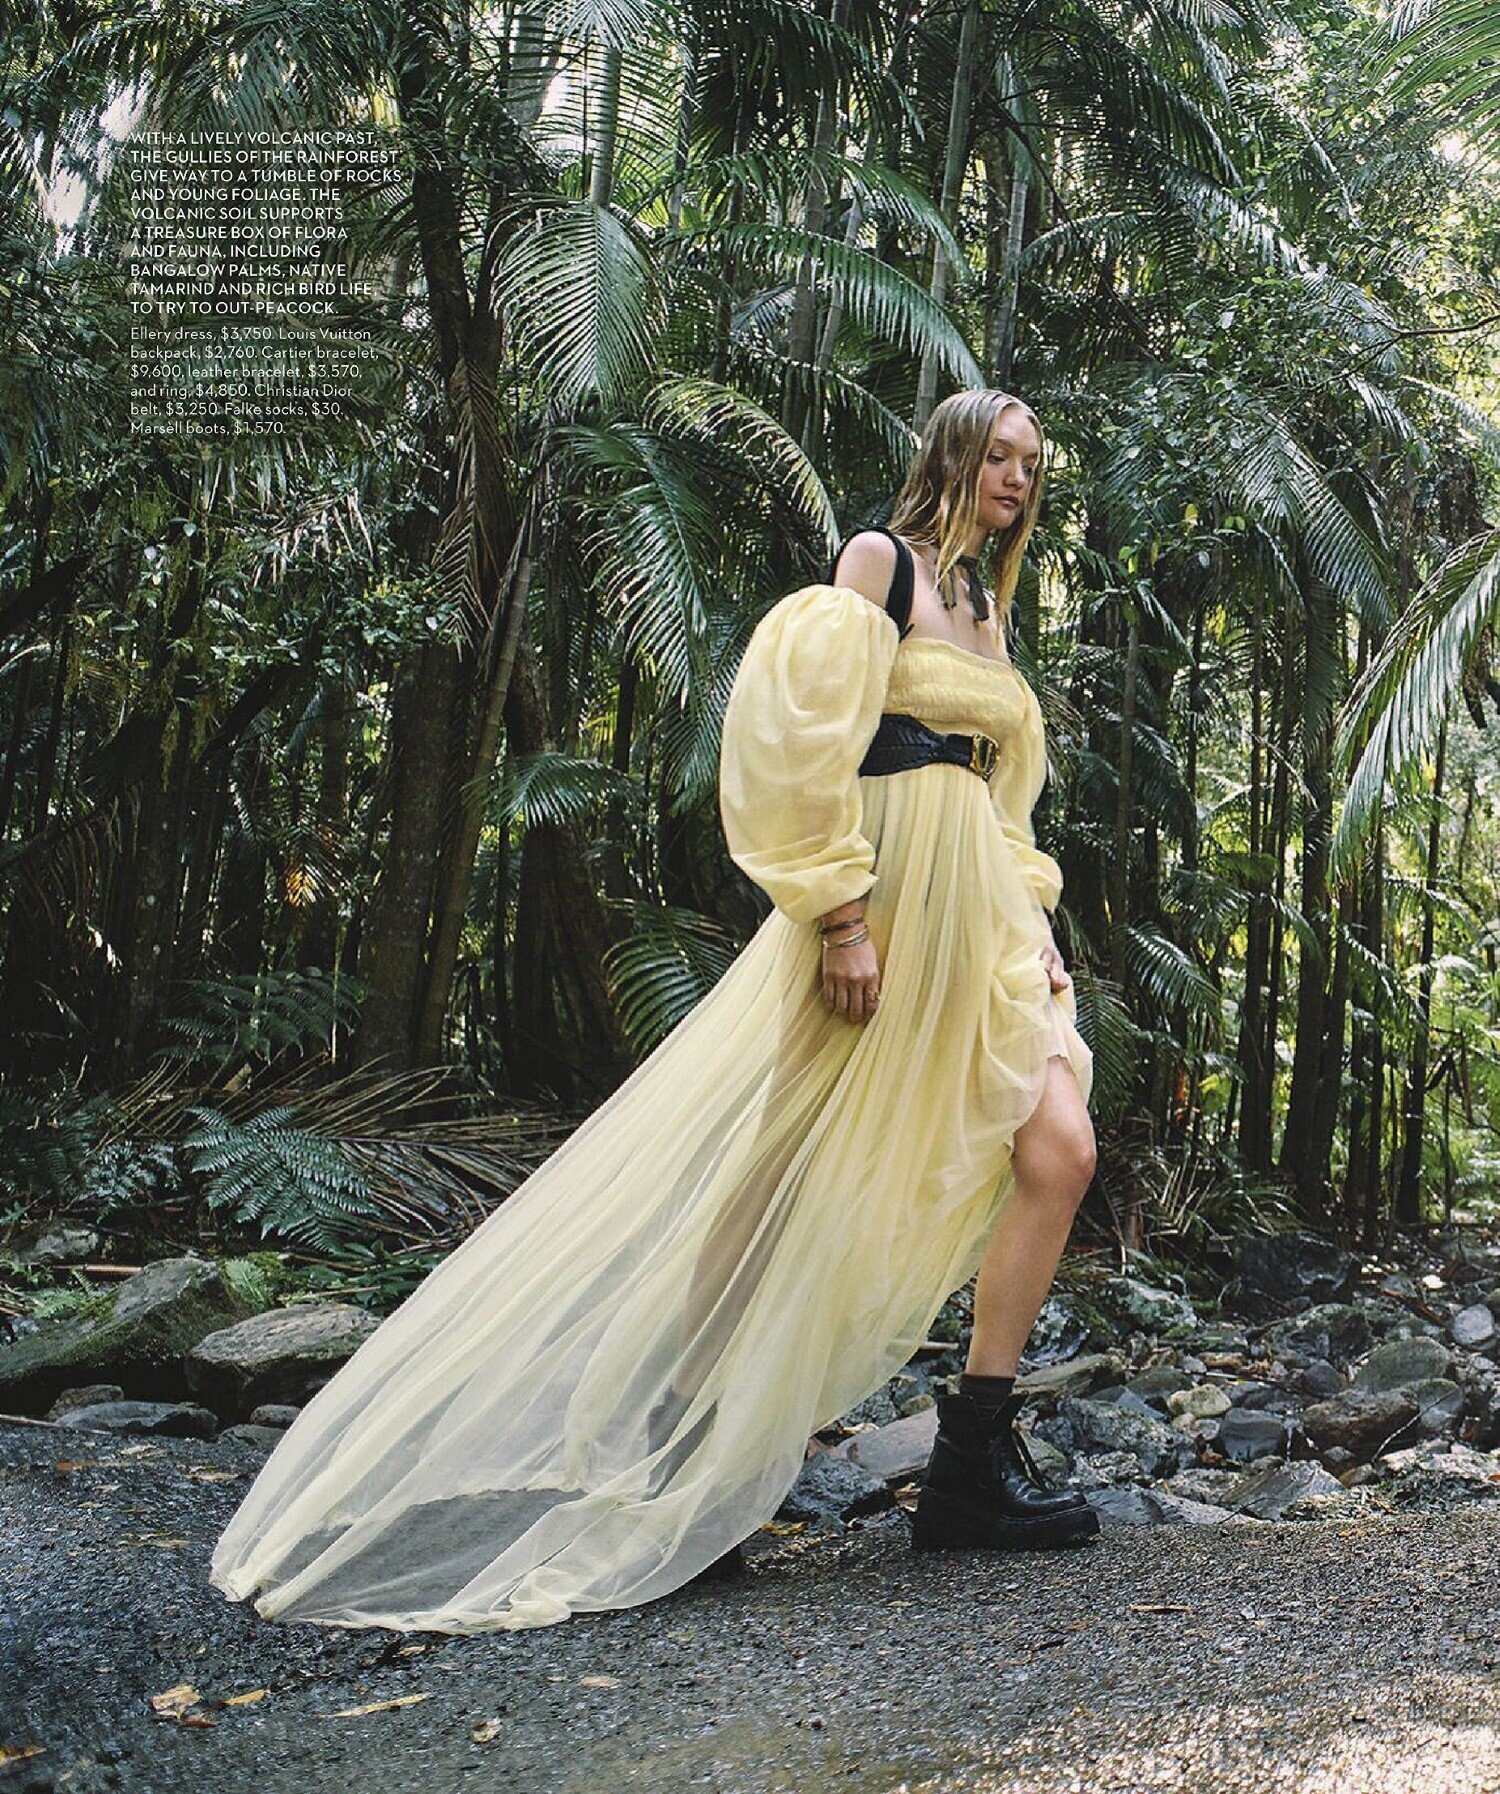 Gemma+Ward+by+Charles+Dennington+for+Vogue+Australia+December+2019+%283%29.jpg